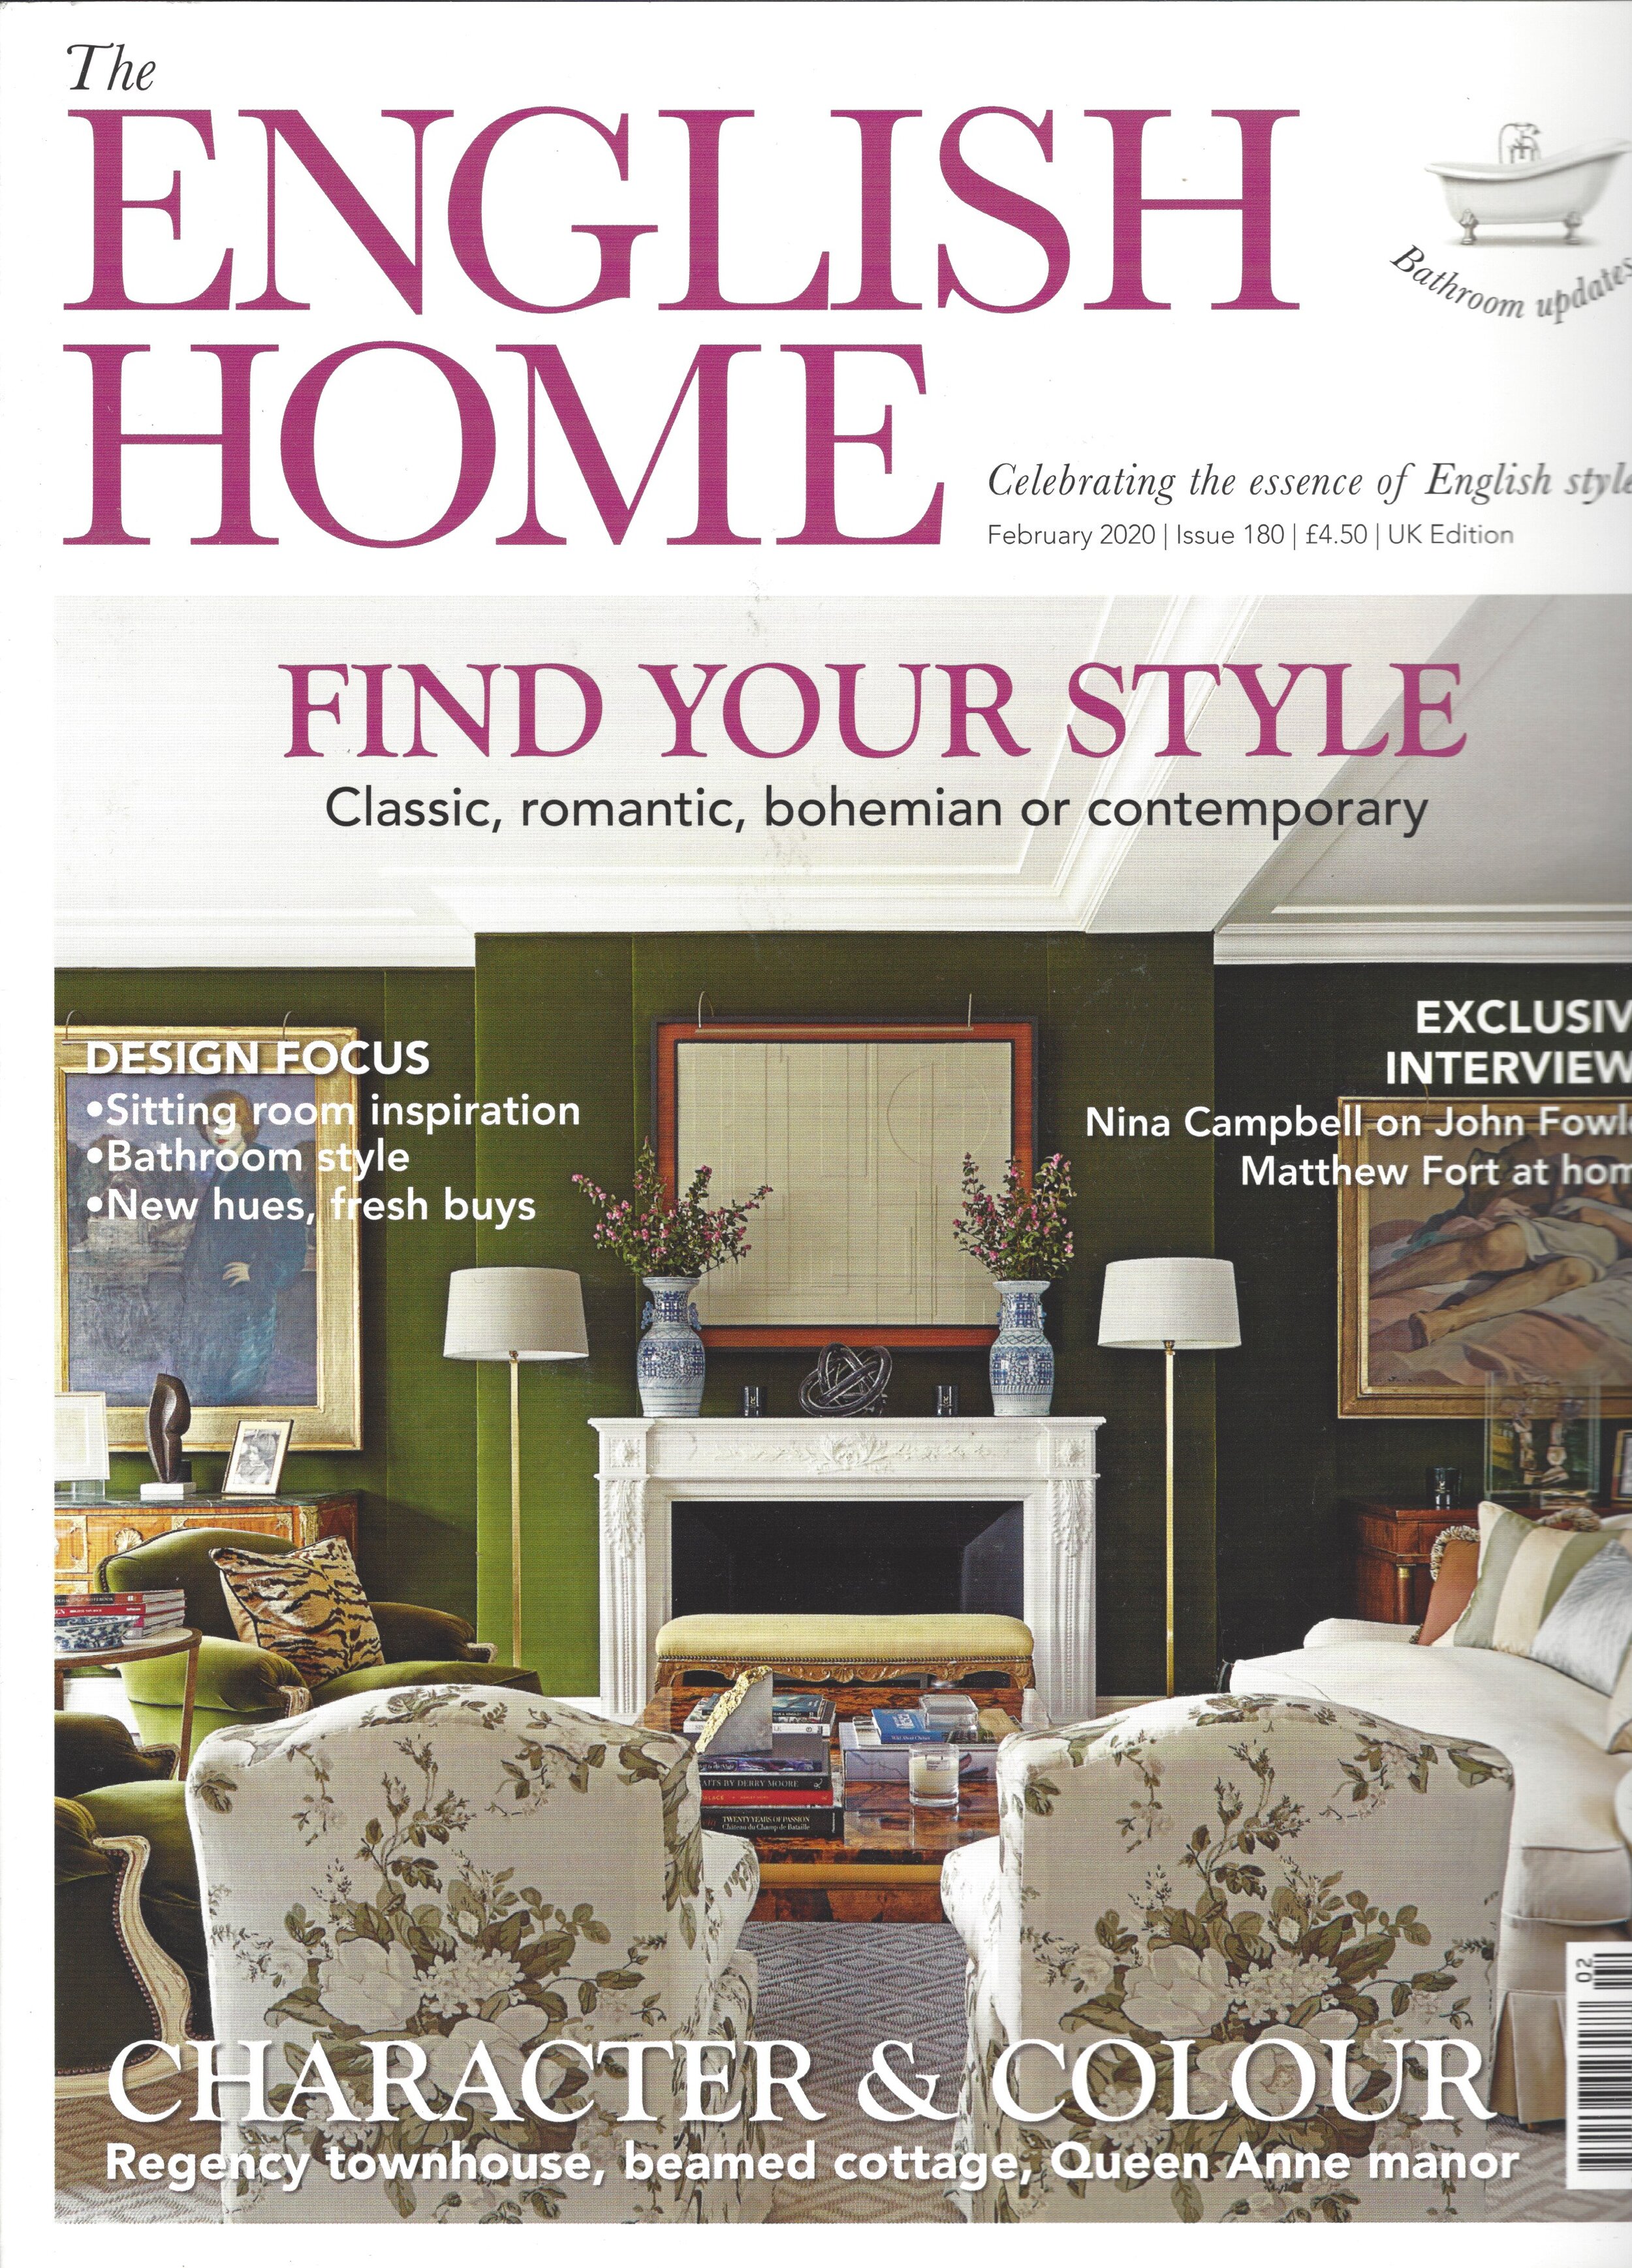 The English Home Feb 2020 cover.jpeg